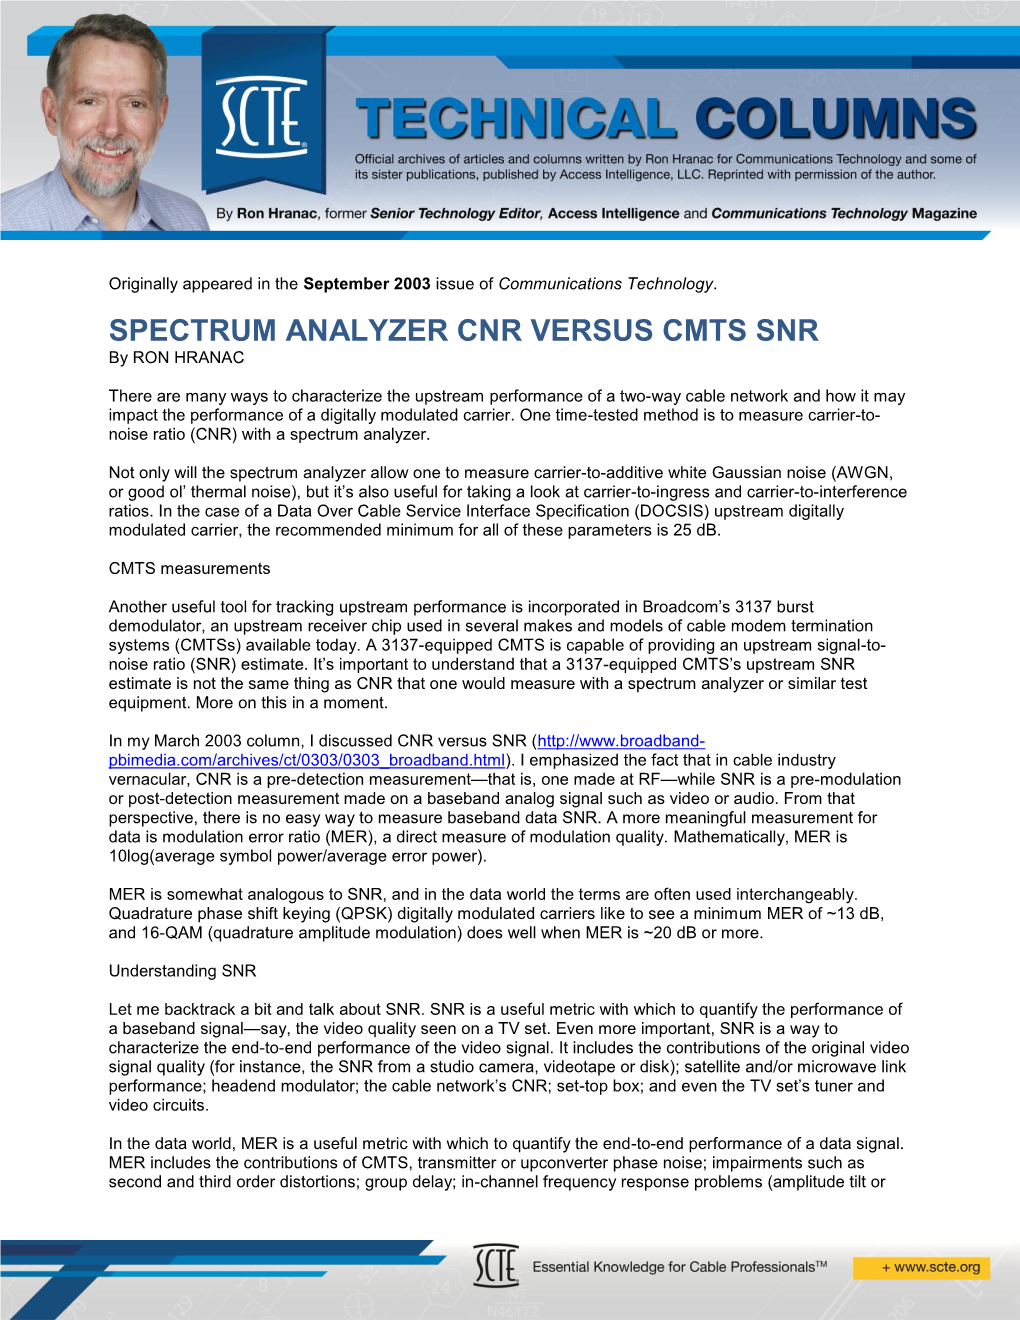 SPECTRUM ANALYZER CNR VERSUS CMTS SNR by RON HRANAC